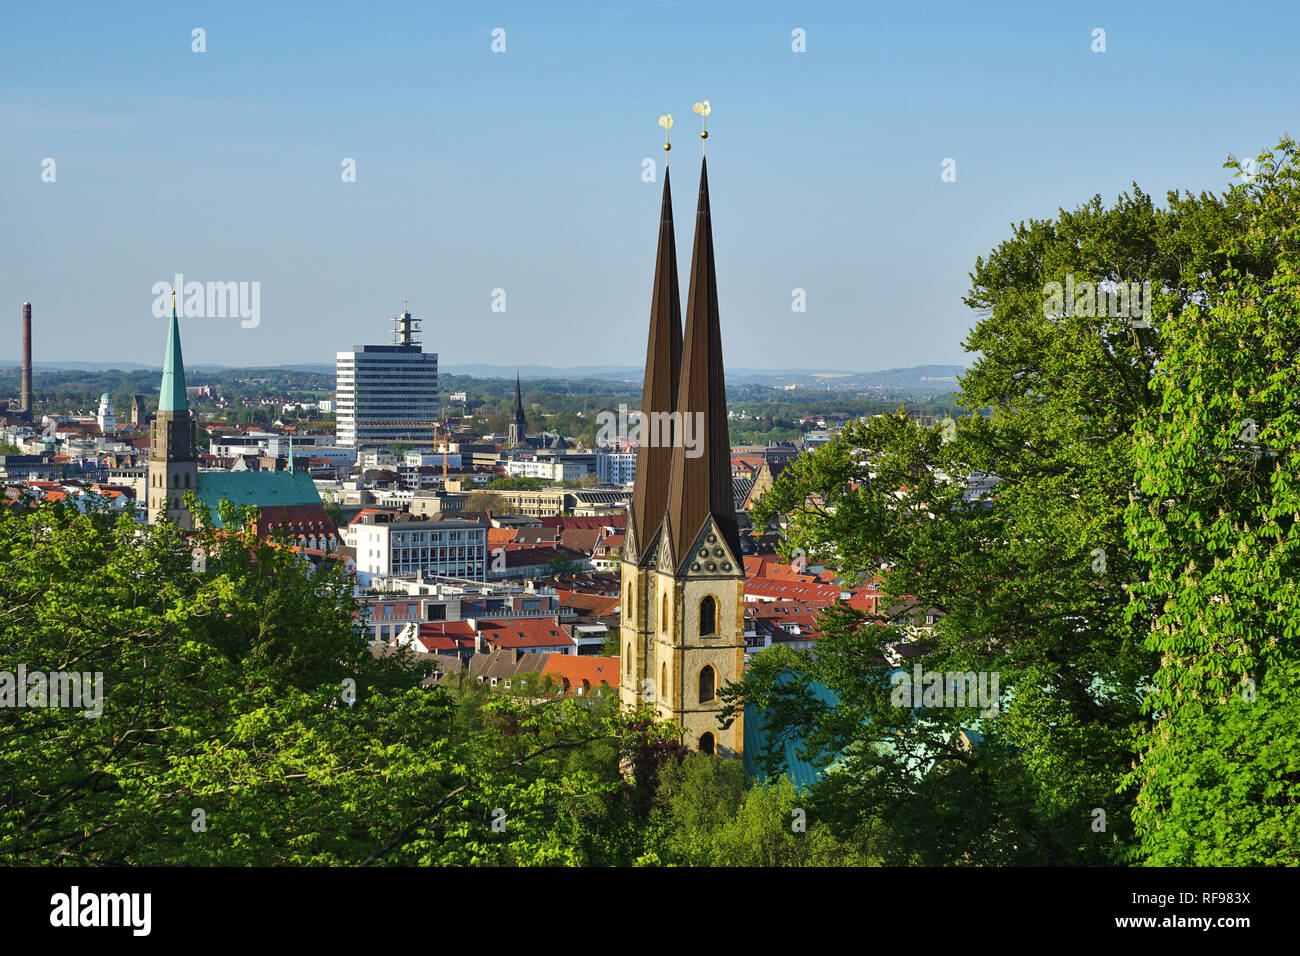 City view of Bielefeld with Nikolaikirche and Neustädter Marienkirche, Germany Stock Photo